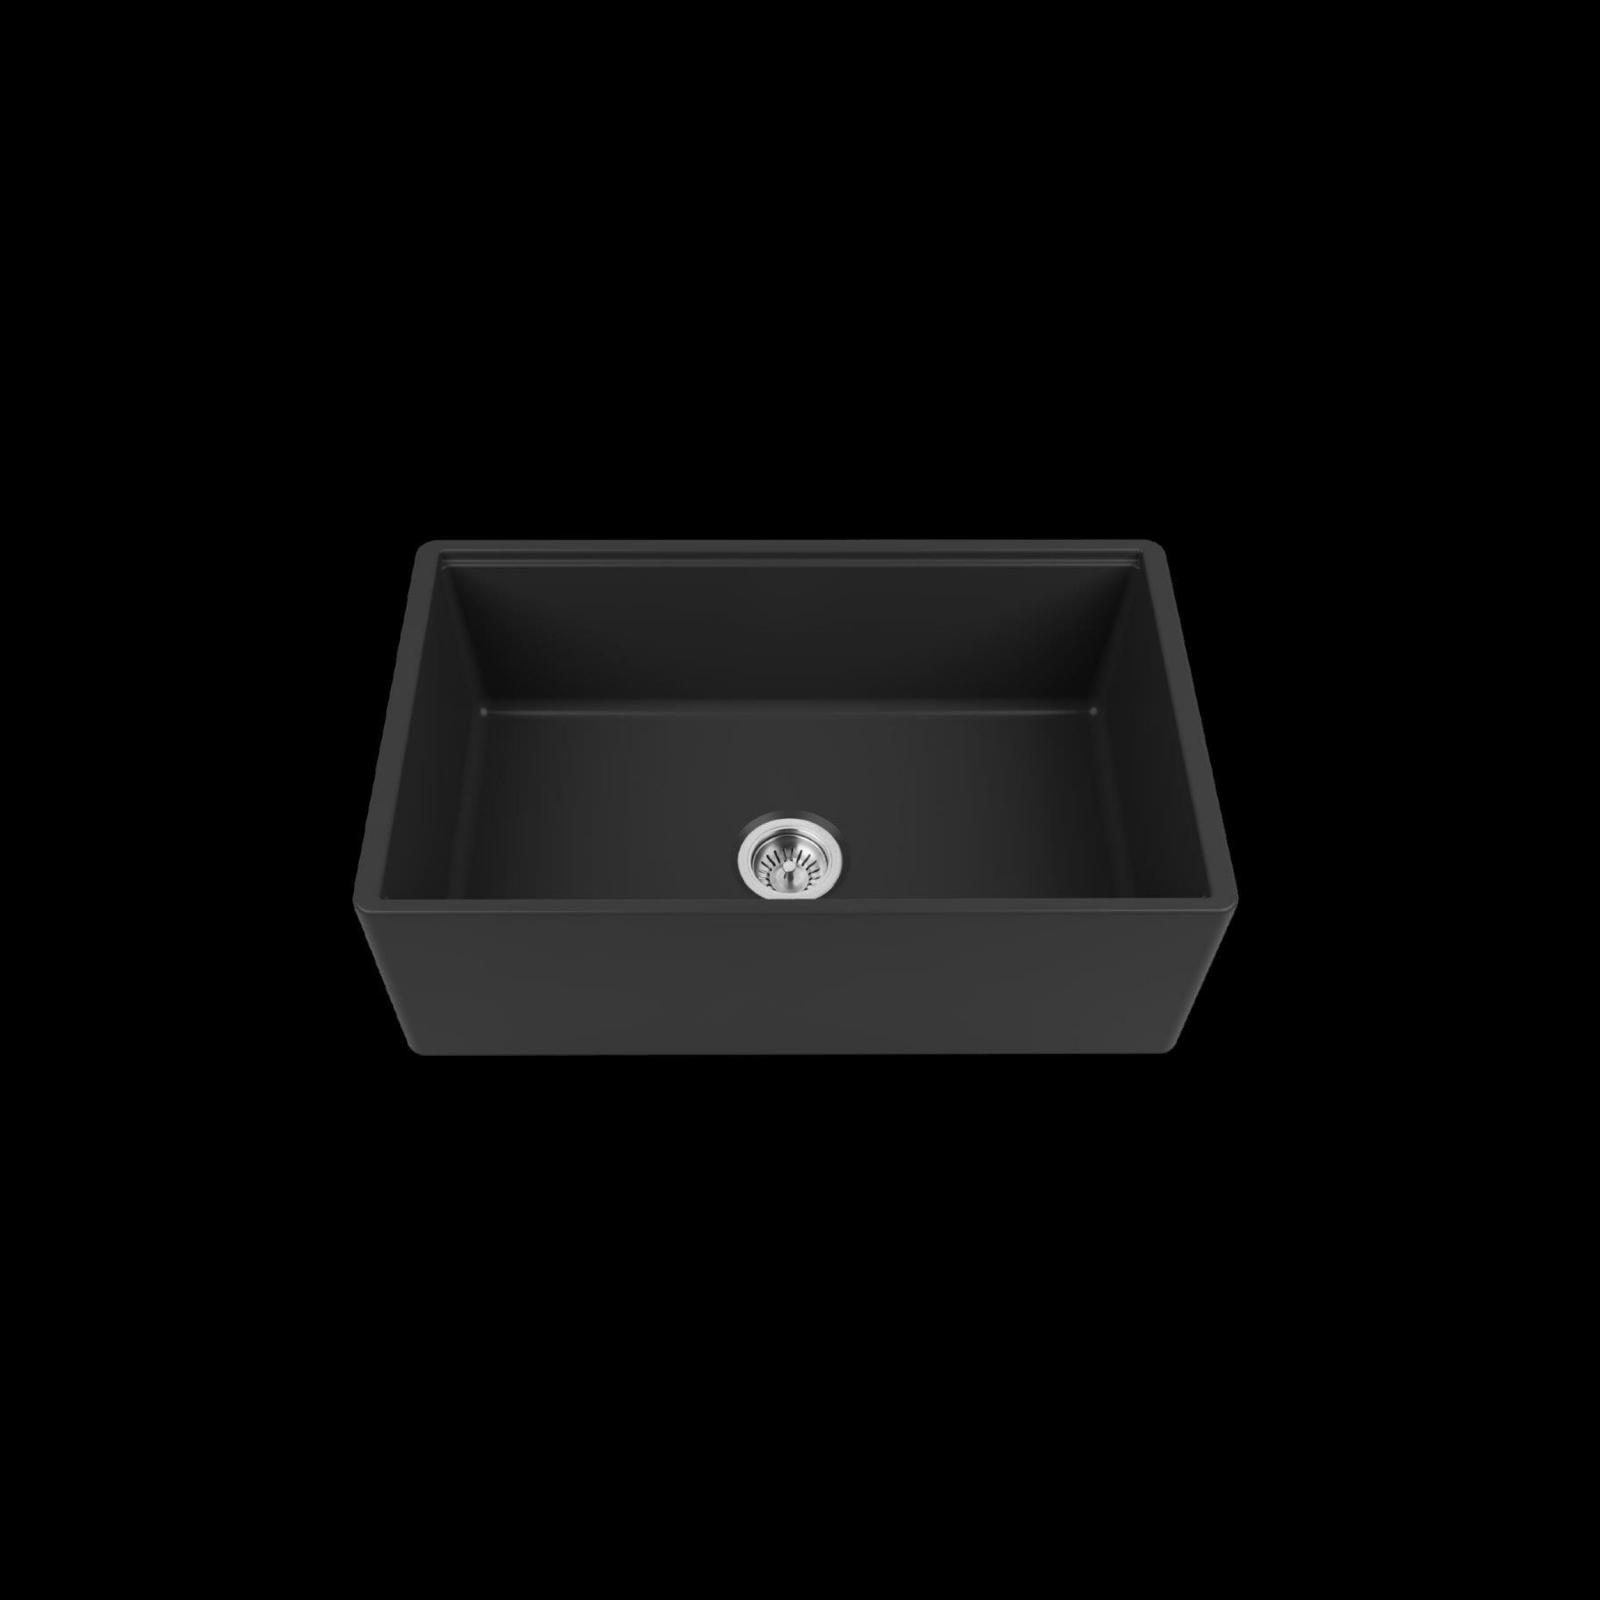 High-quality sink Louis Le Grand I black - single bowl, ceramic - 2